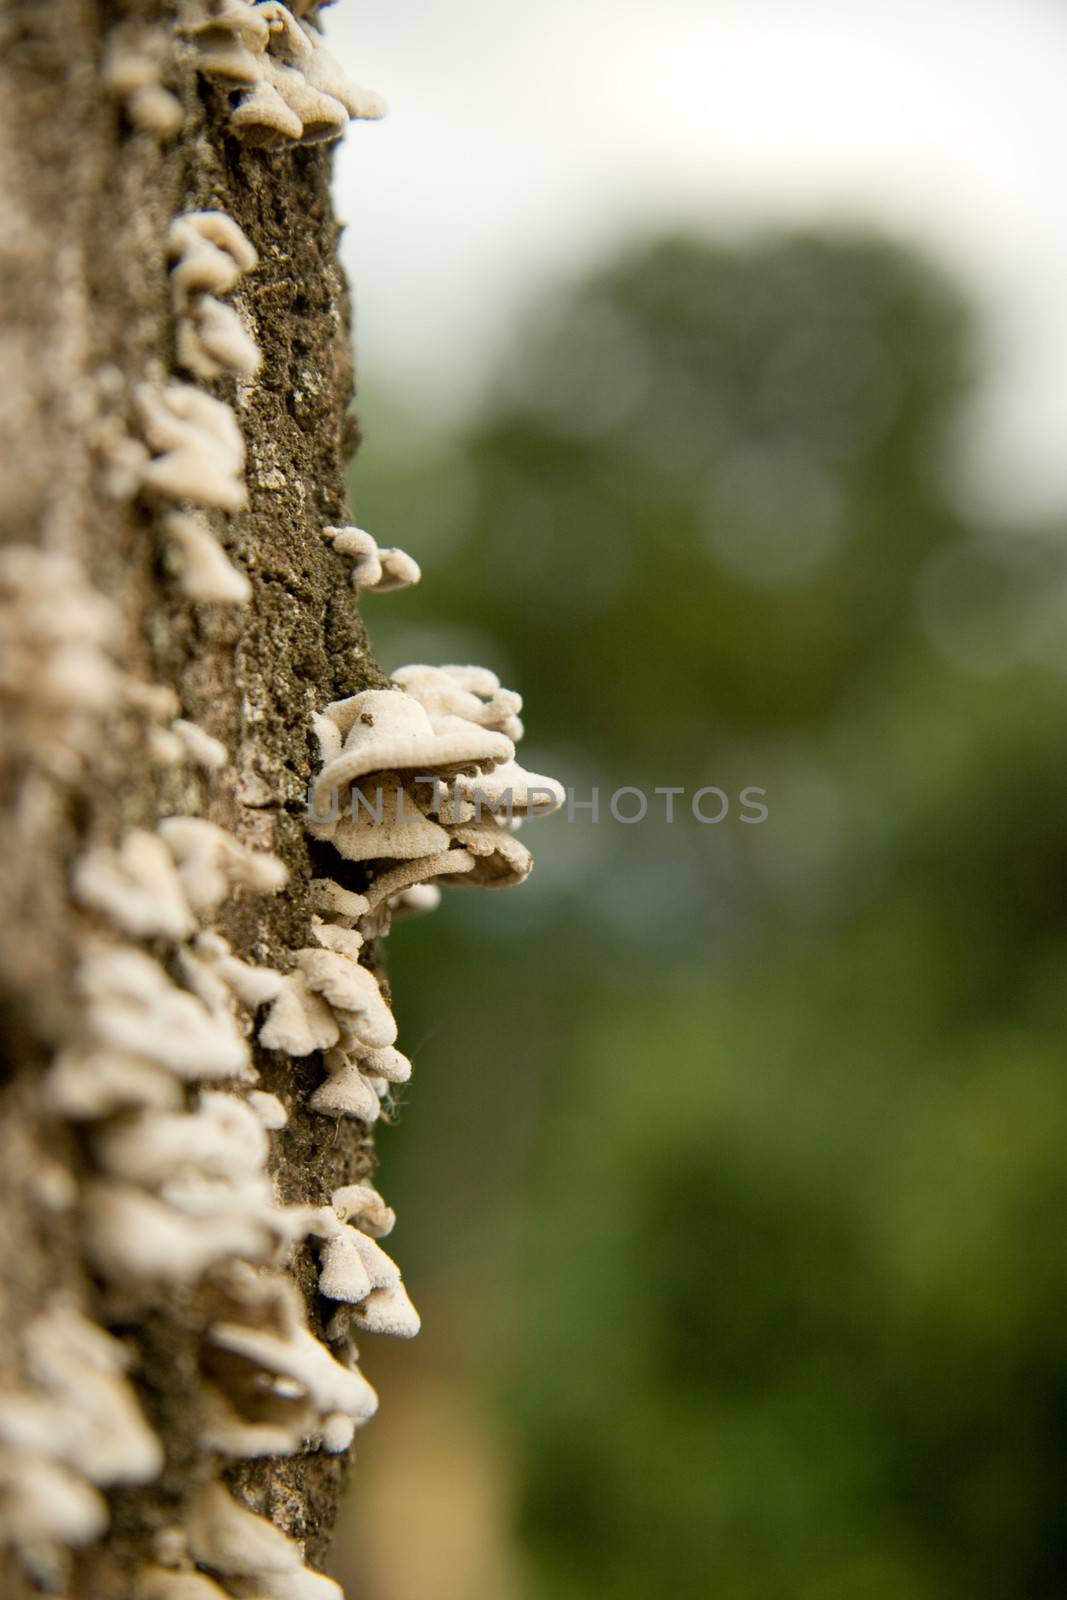 Wild mushrooms growing on the side of a mango tree, Sao Paulo, Brazil